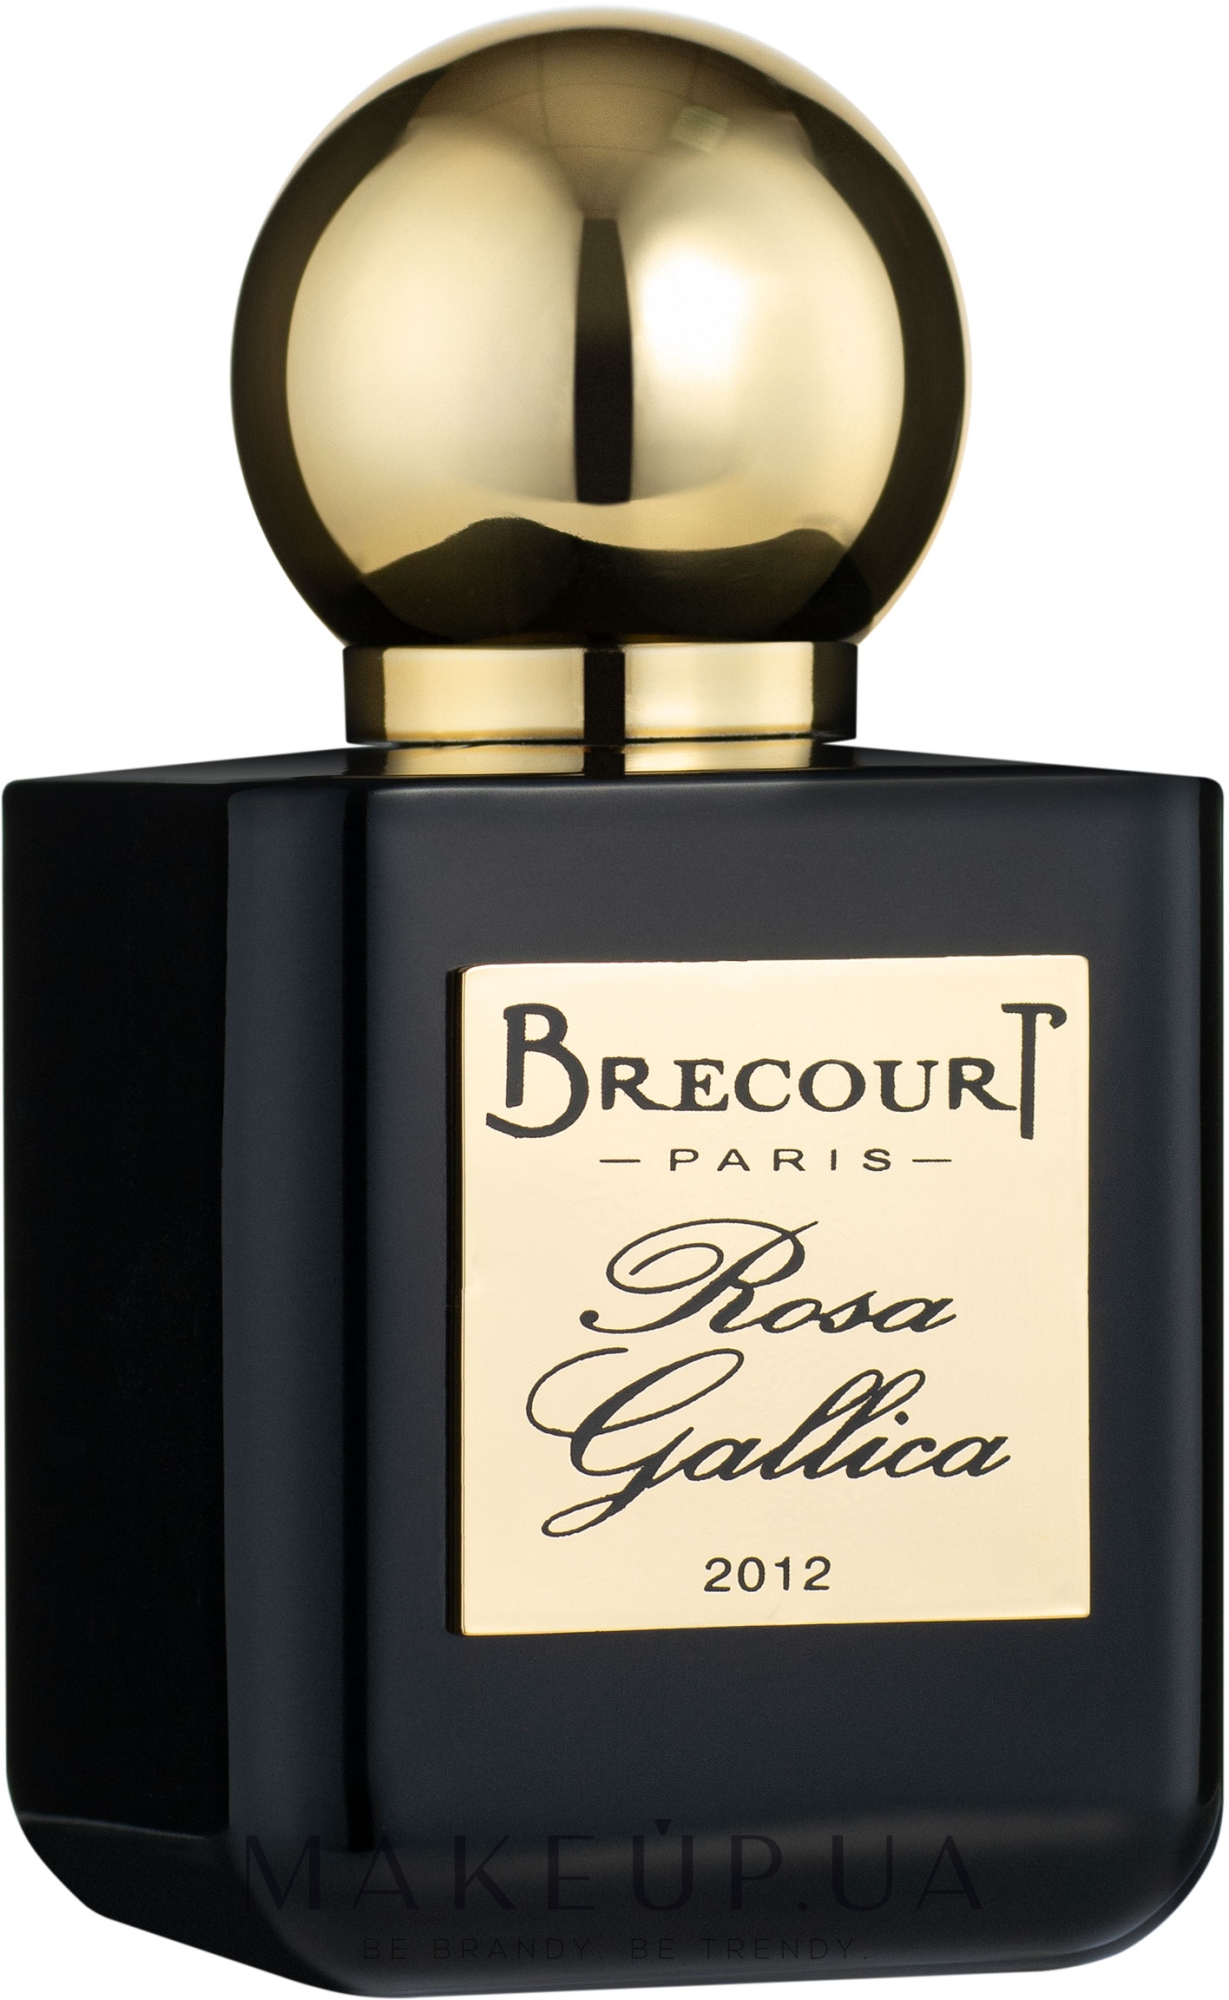 Духи Brecourt Rosa Gallica. Brecourt Osmanthus Guilin Perfume. Brecourt Парфюм отзывы. Brecourt Парфюм solaire отзыв. Brecourt osmanthus guilin